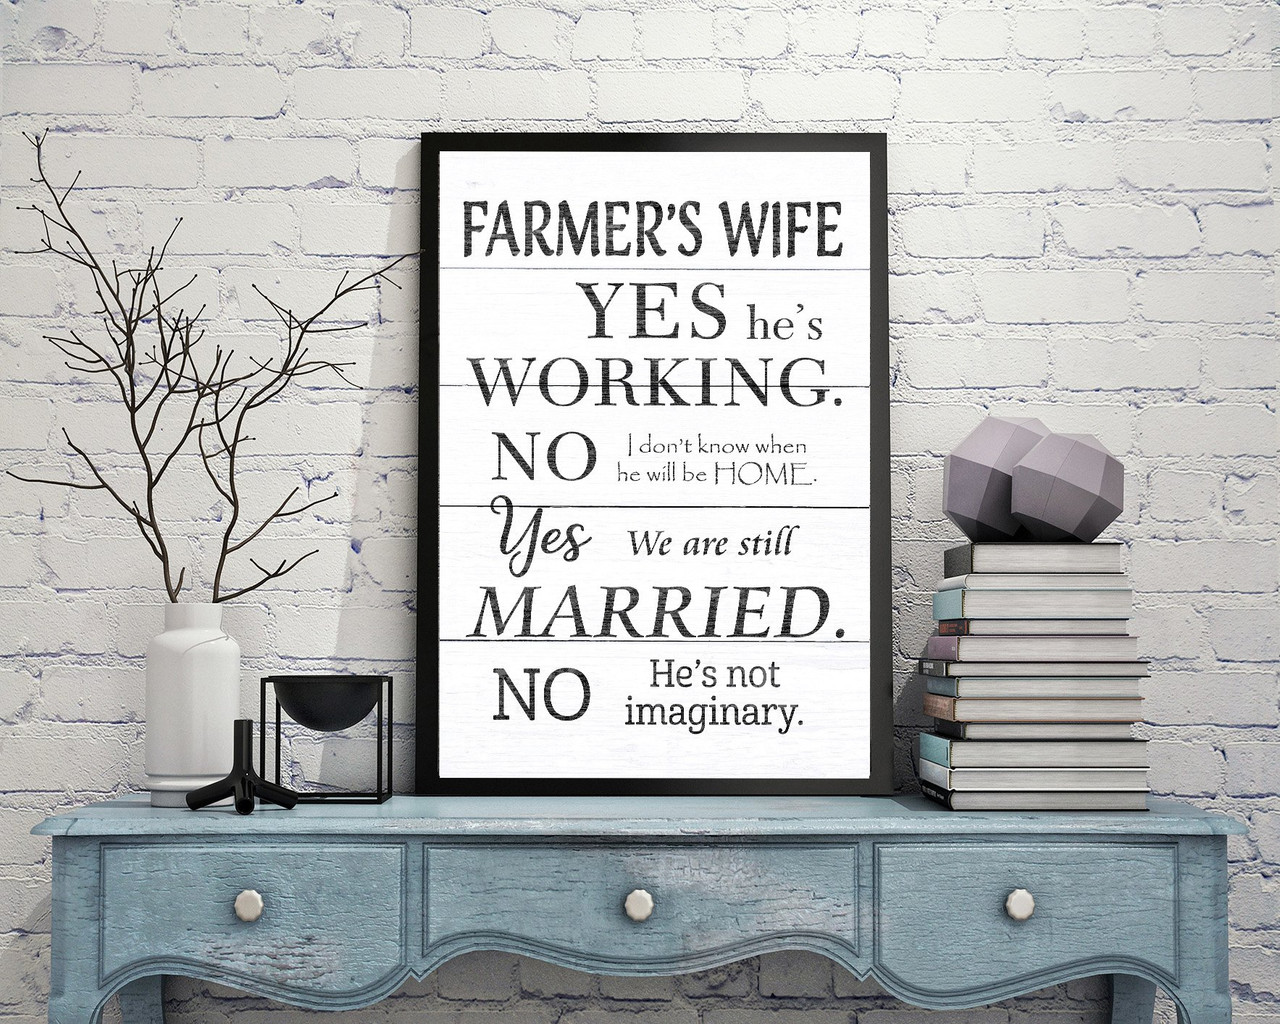 The Farmer's Wife 12x18 plaque